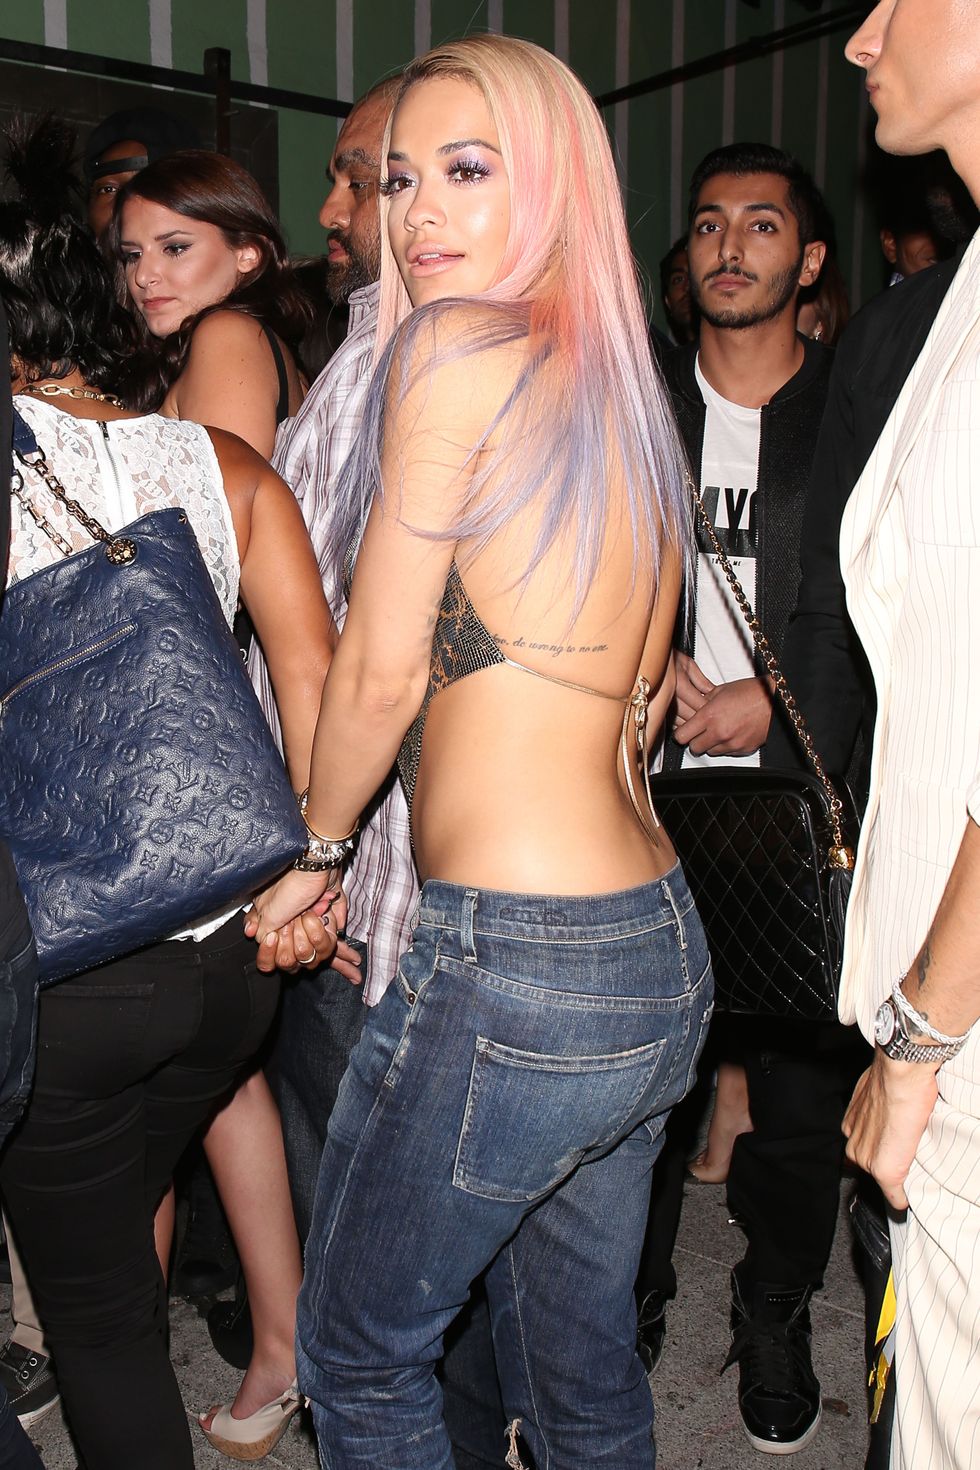 Rita Ora swishing her pink and blue hair all around